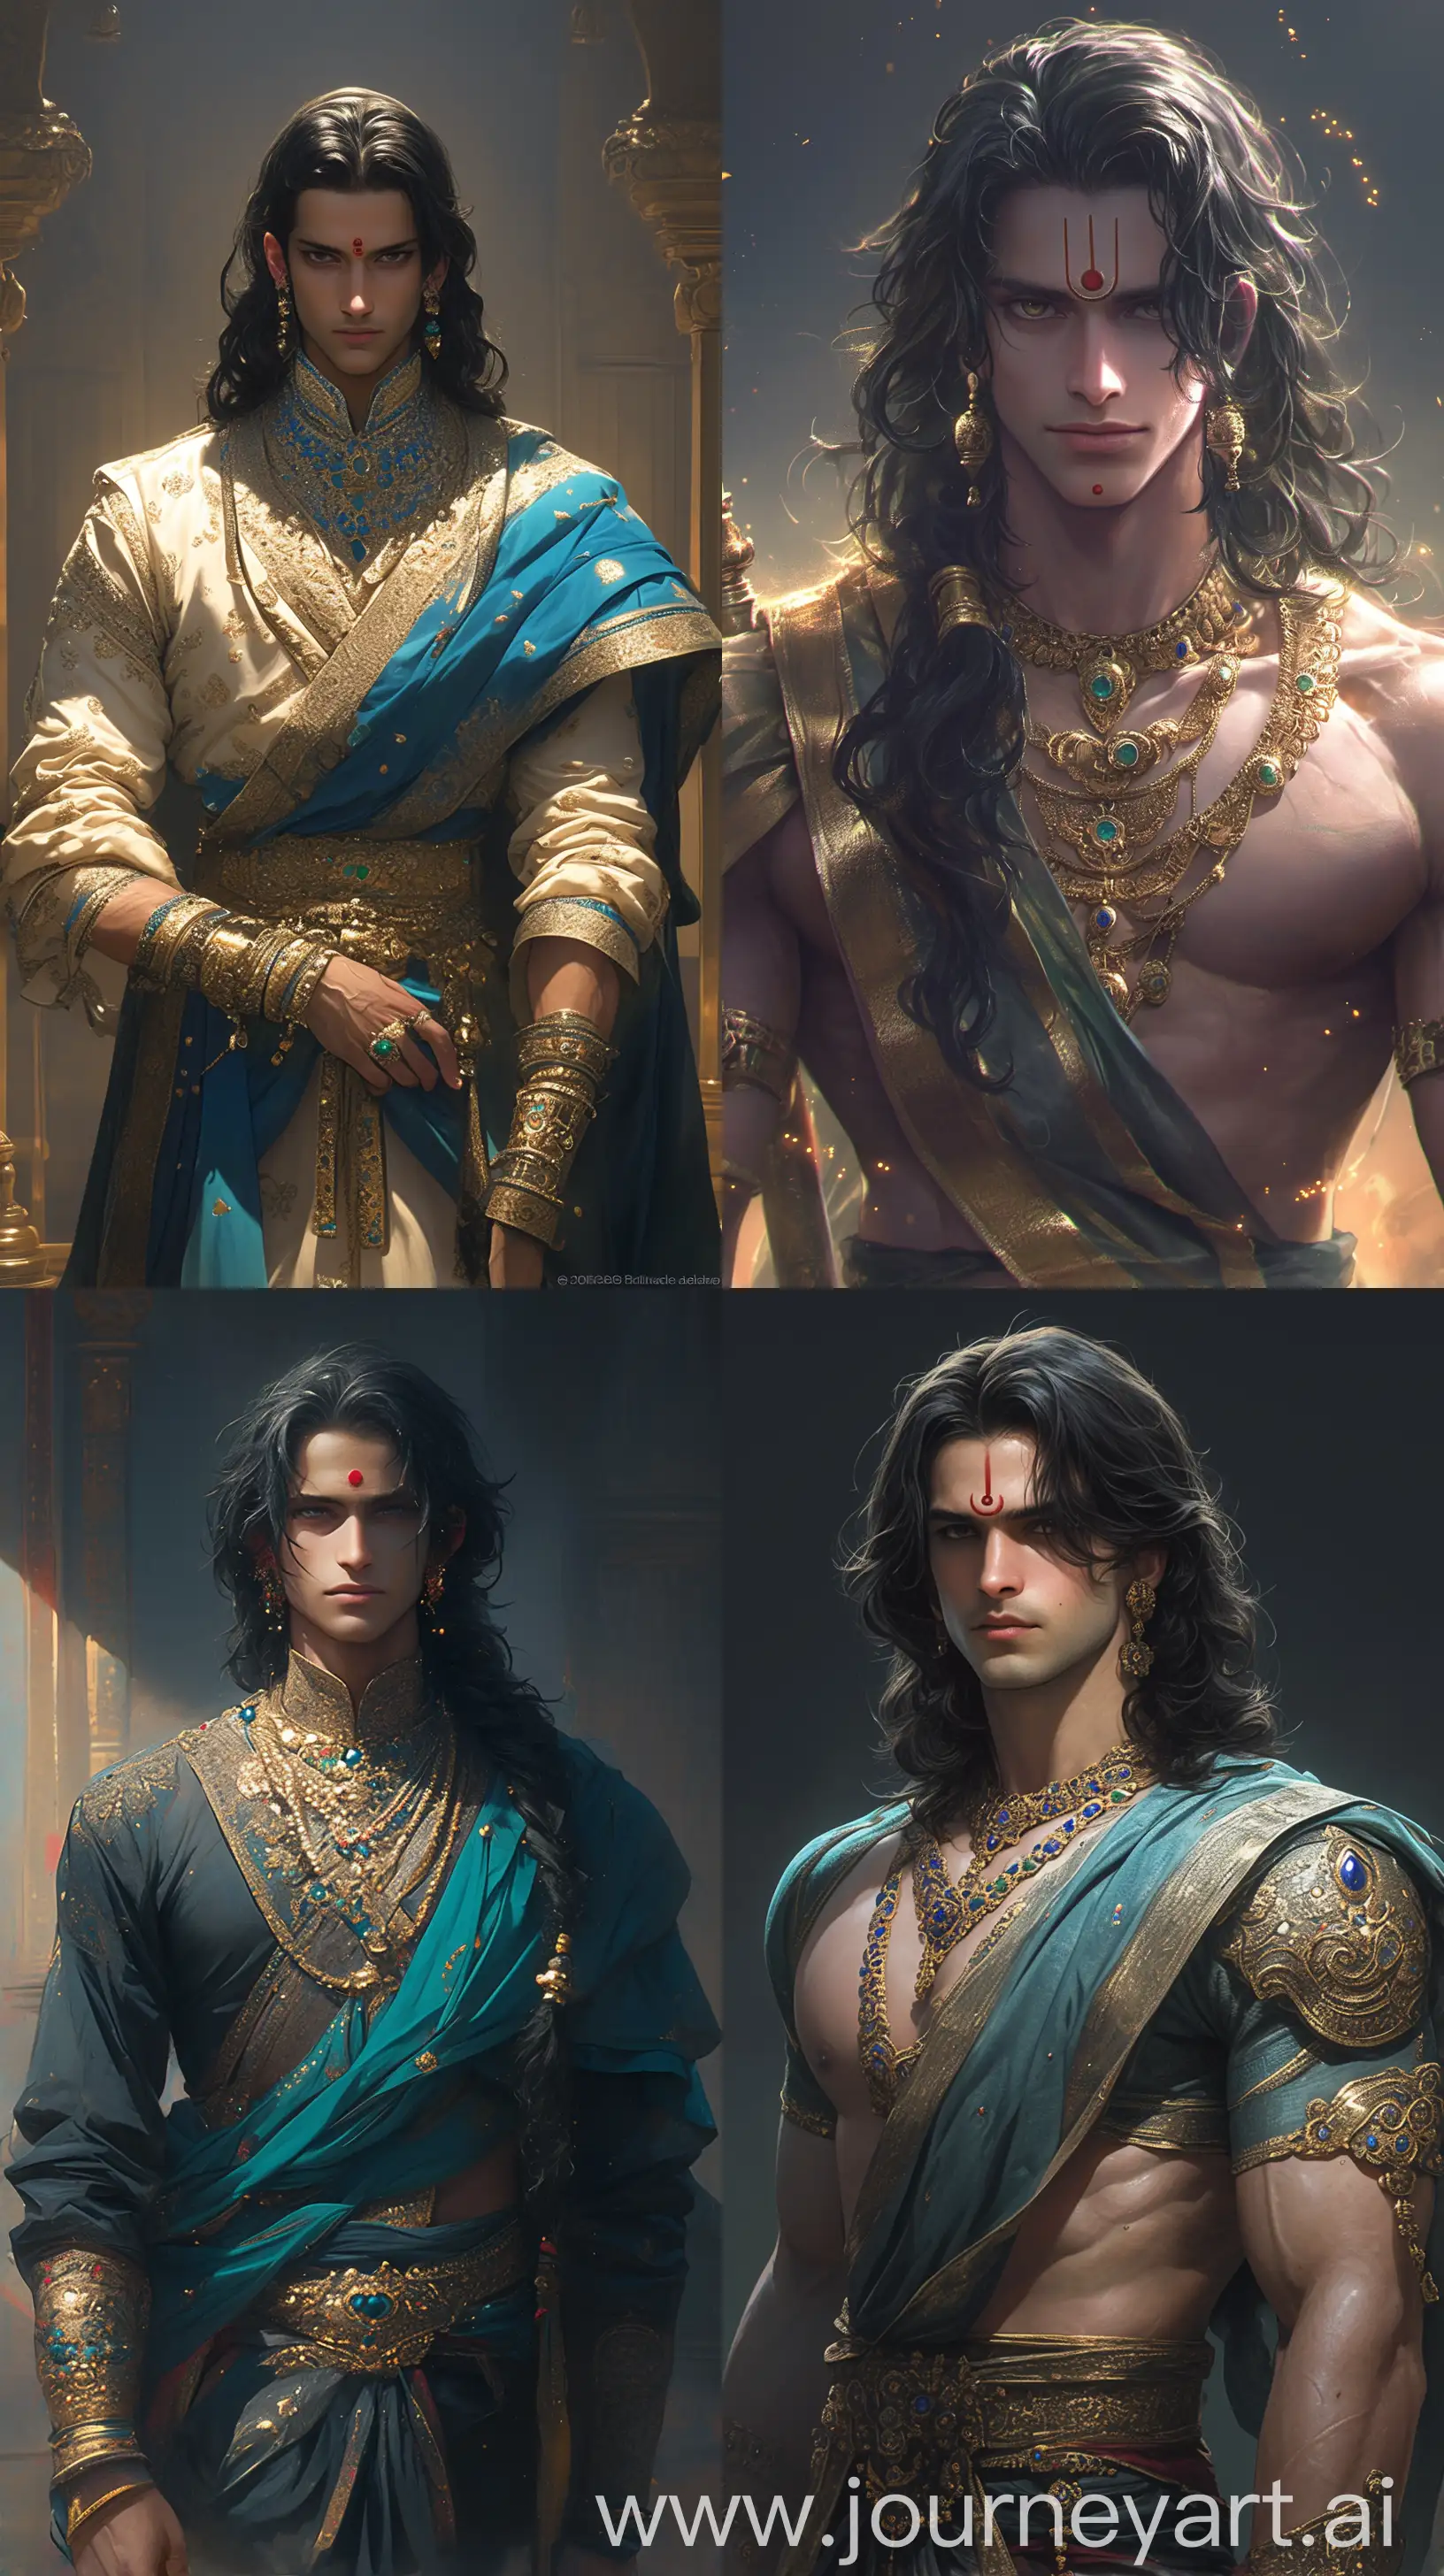 Serene-Indian-Prince-of-Mahabharata-Era-in-Luxurious-Regalia